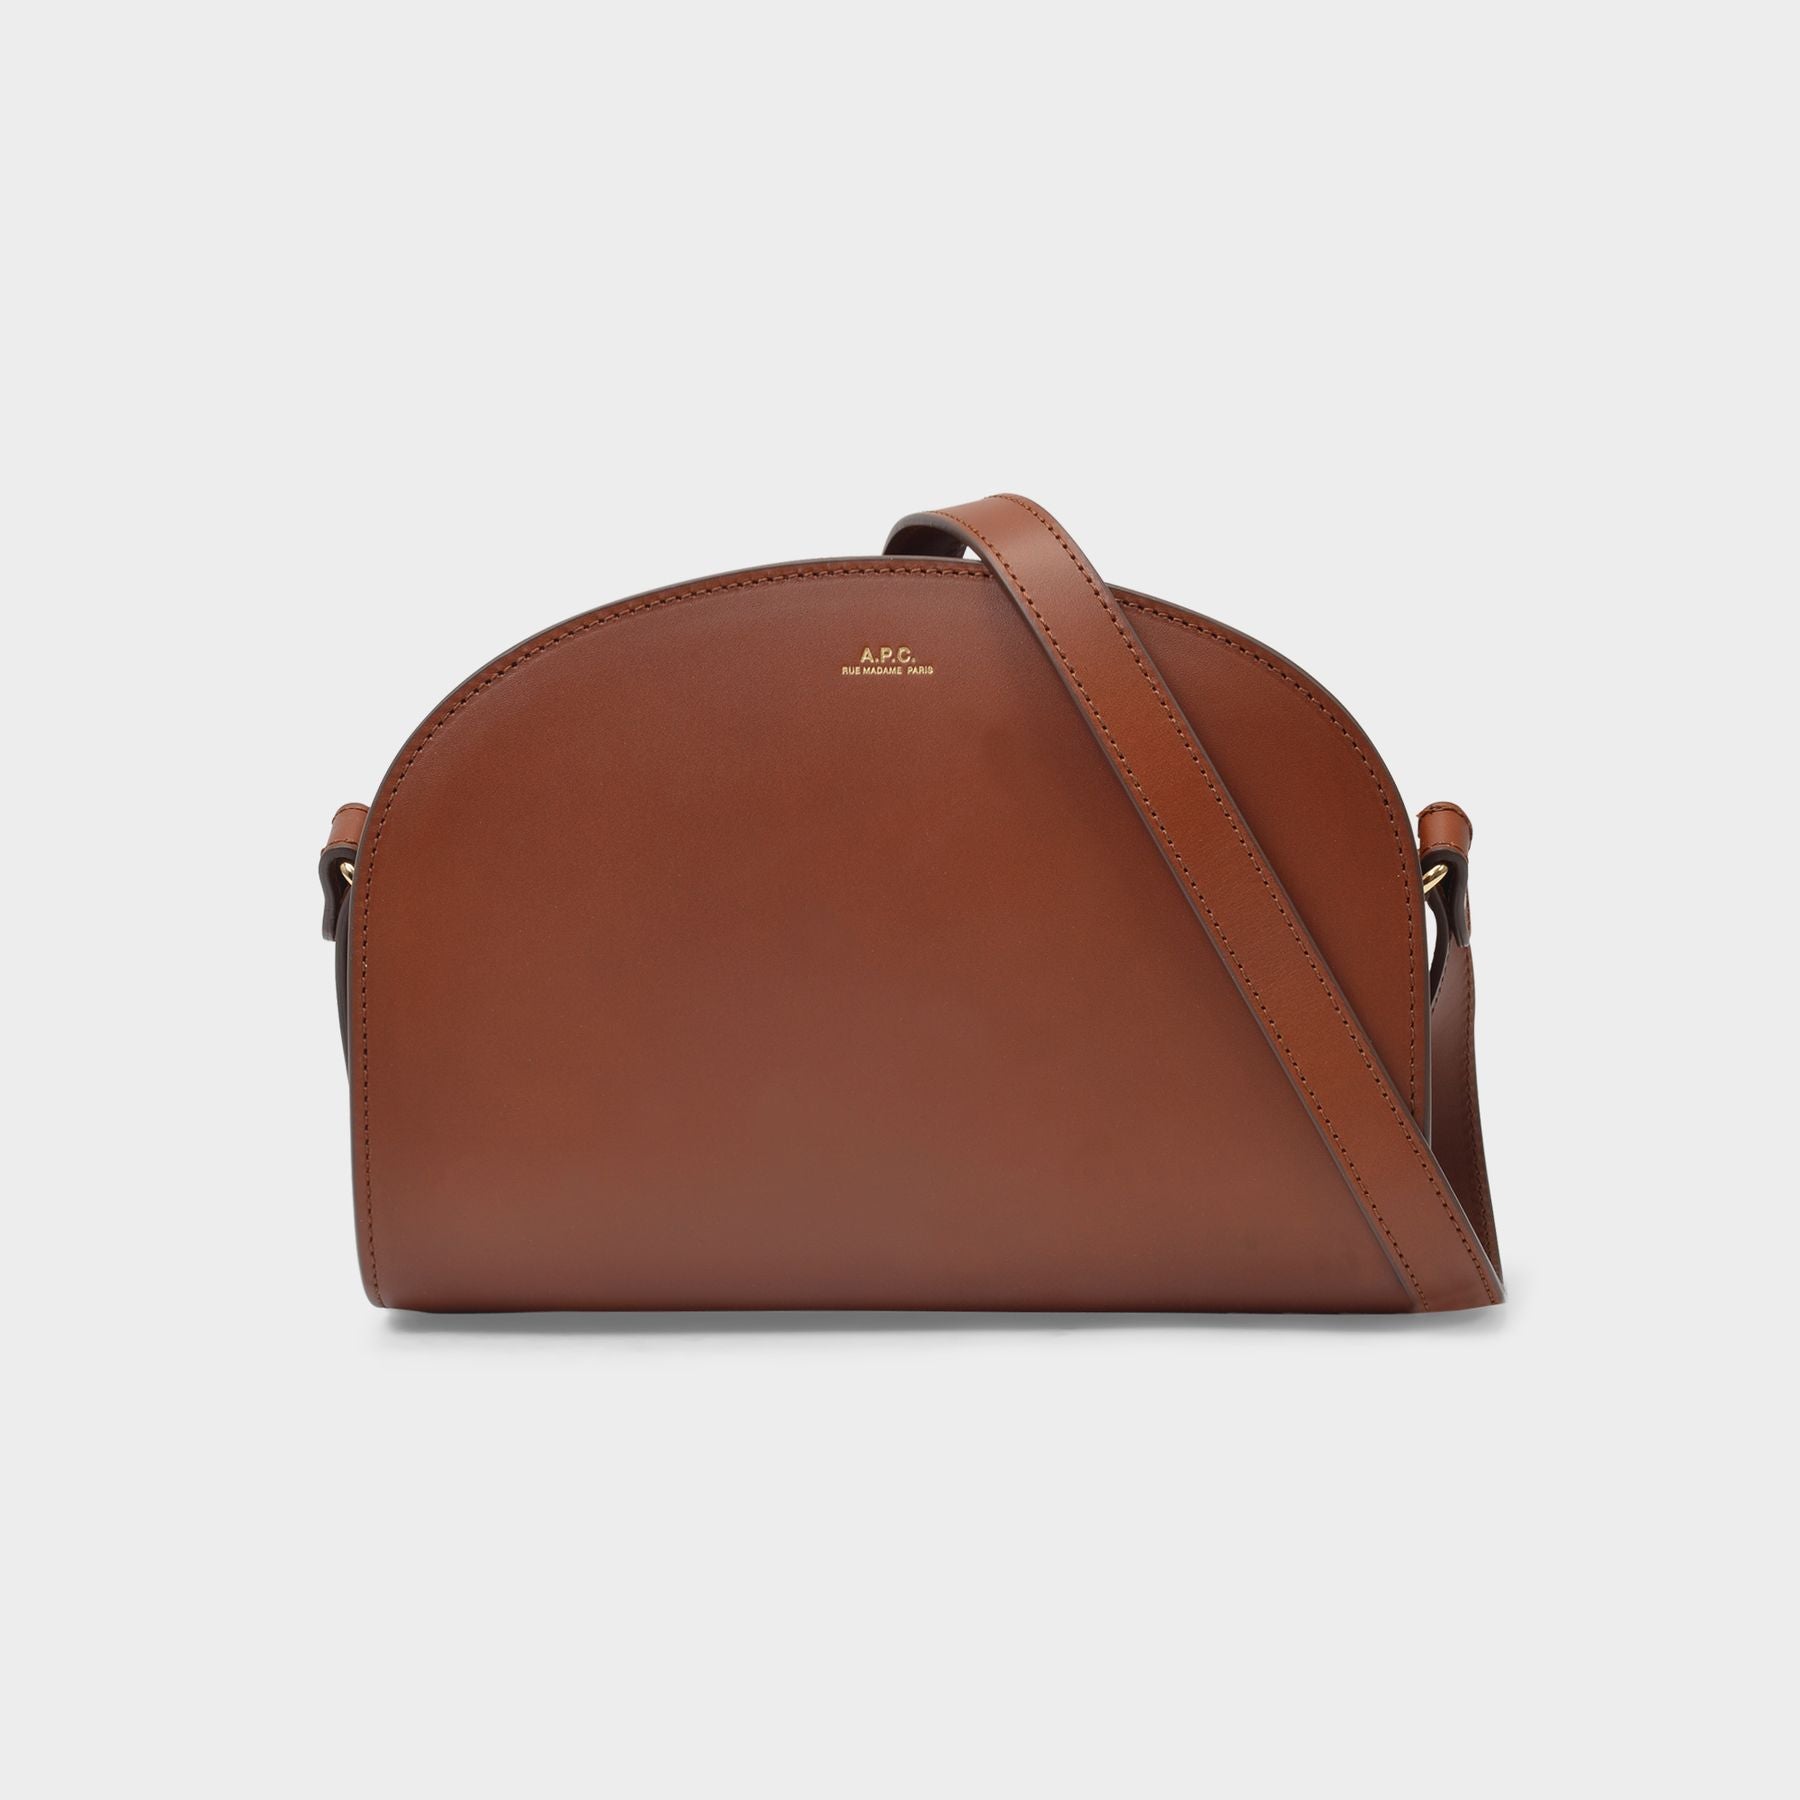 Demi Lune leather handbag